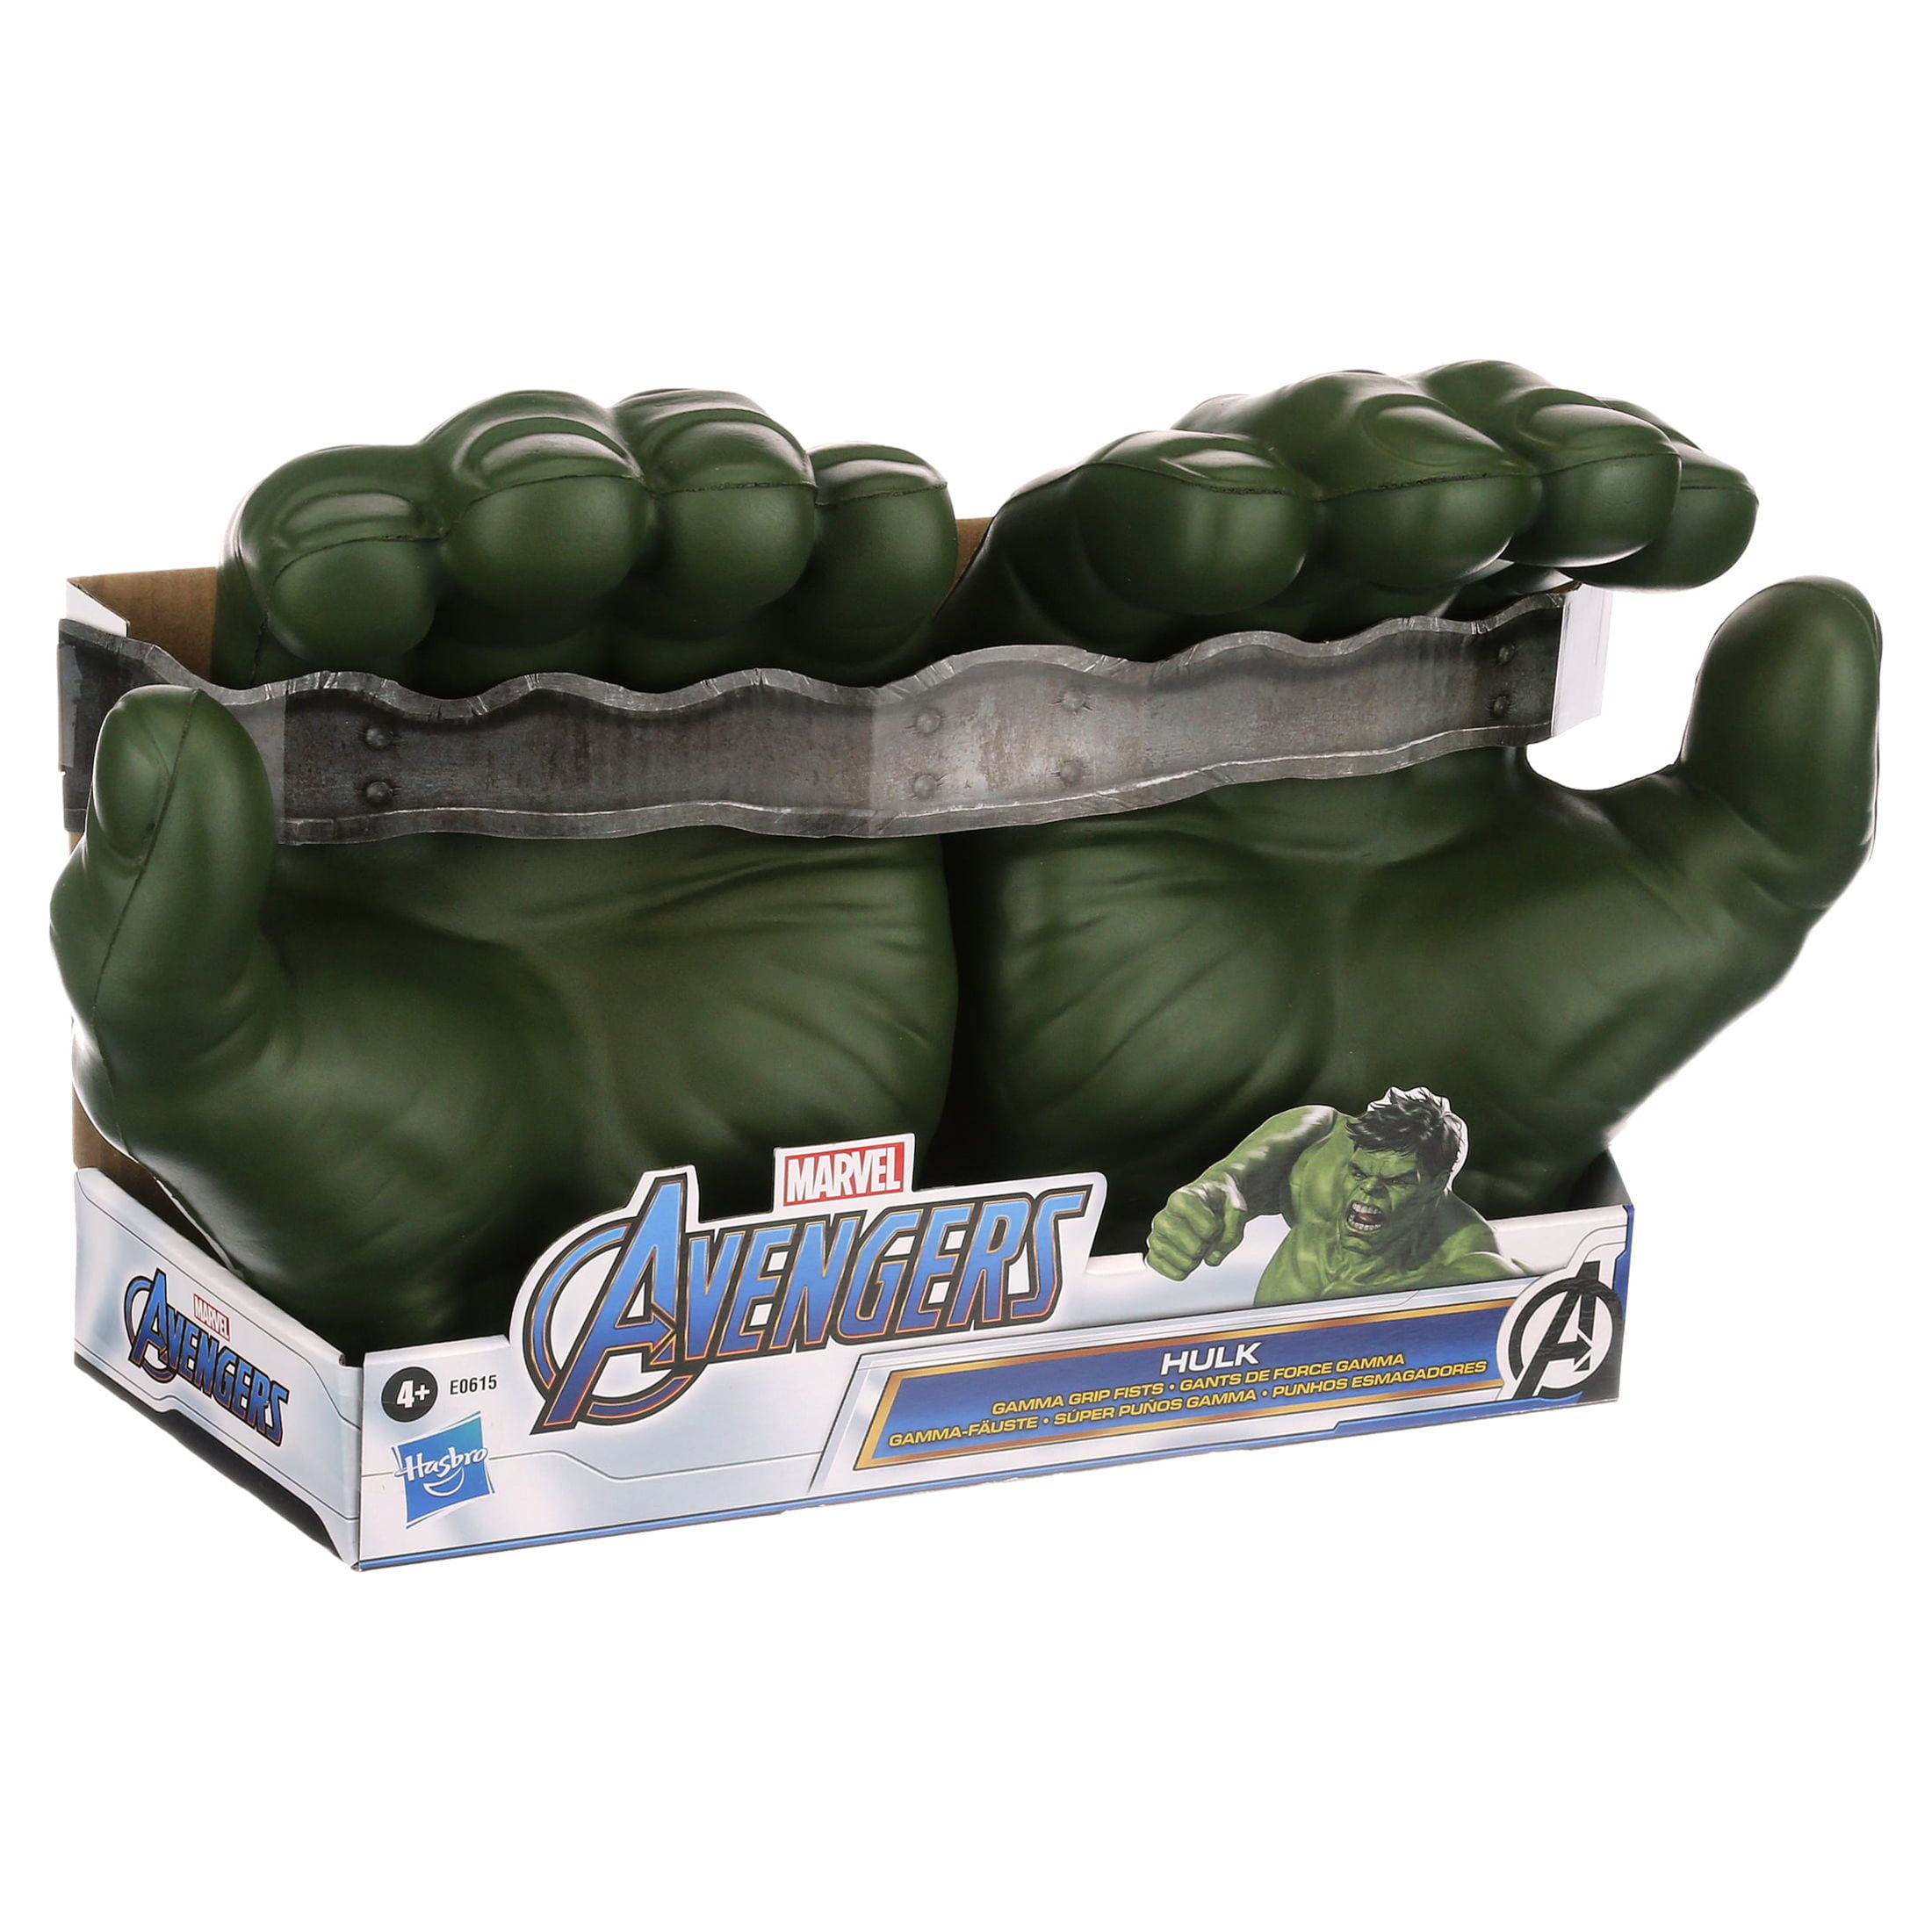 Avengers: Age of Ultron Gamma Grip Hulk Fists